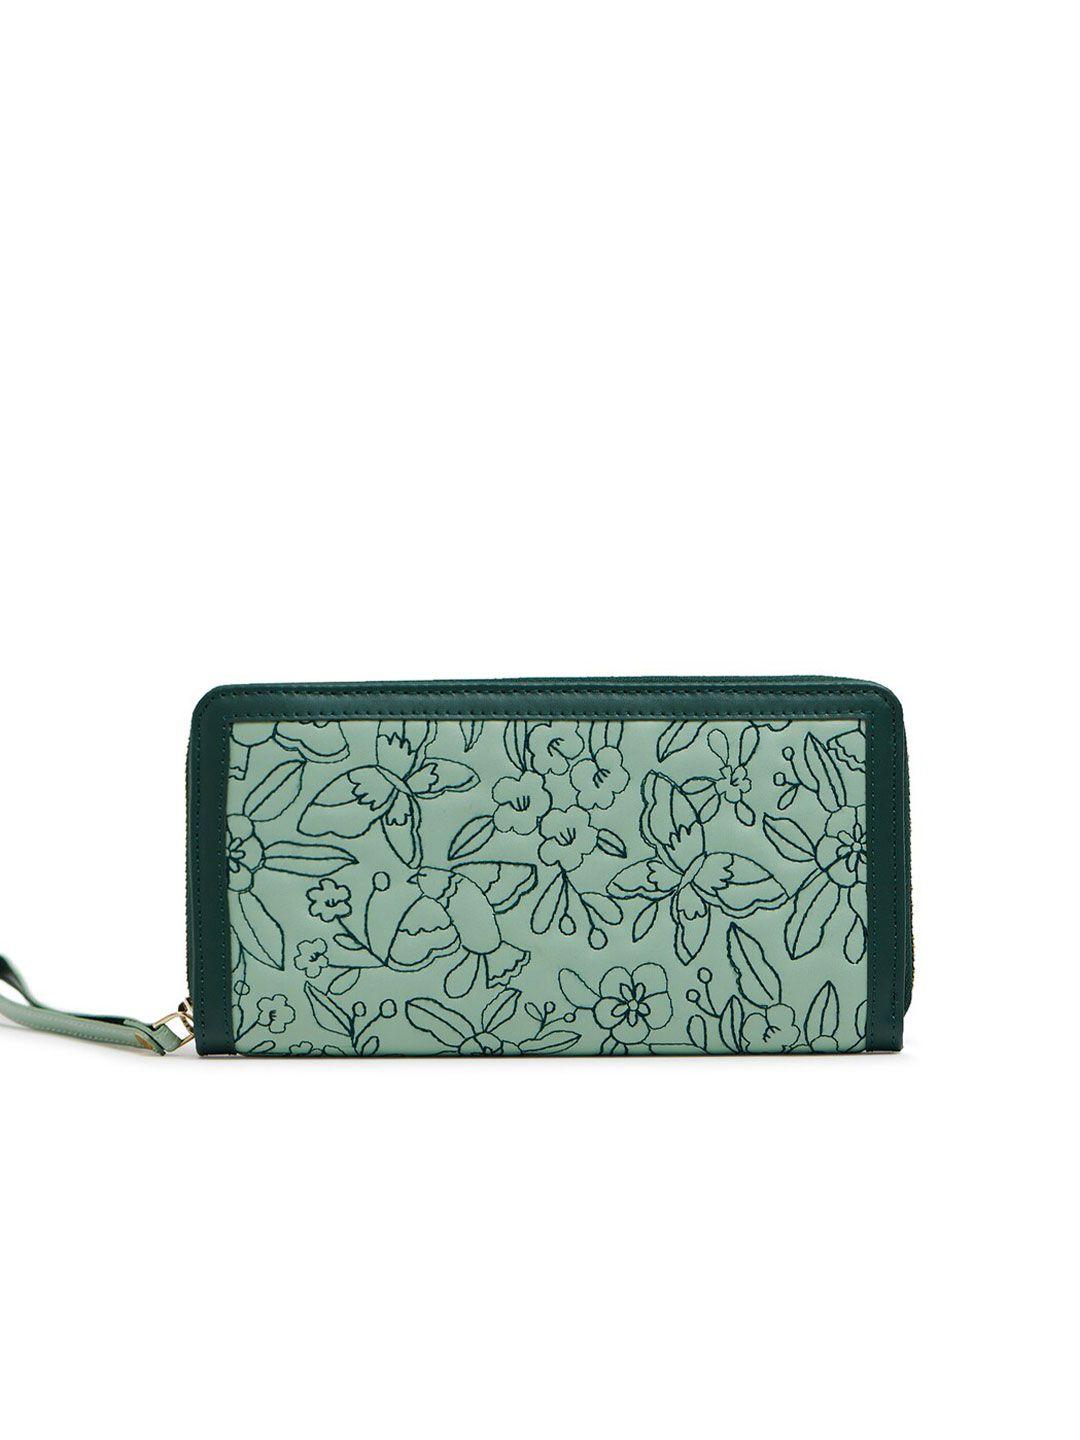 chumbak blue & green printed purse clutch